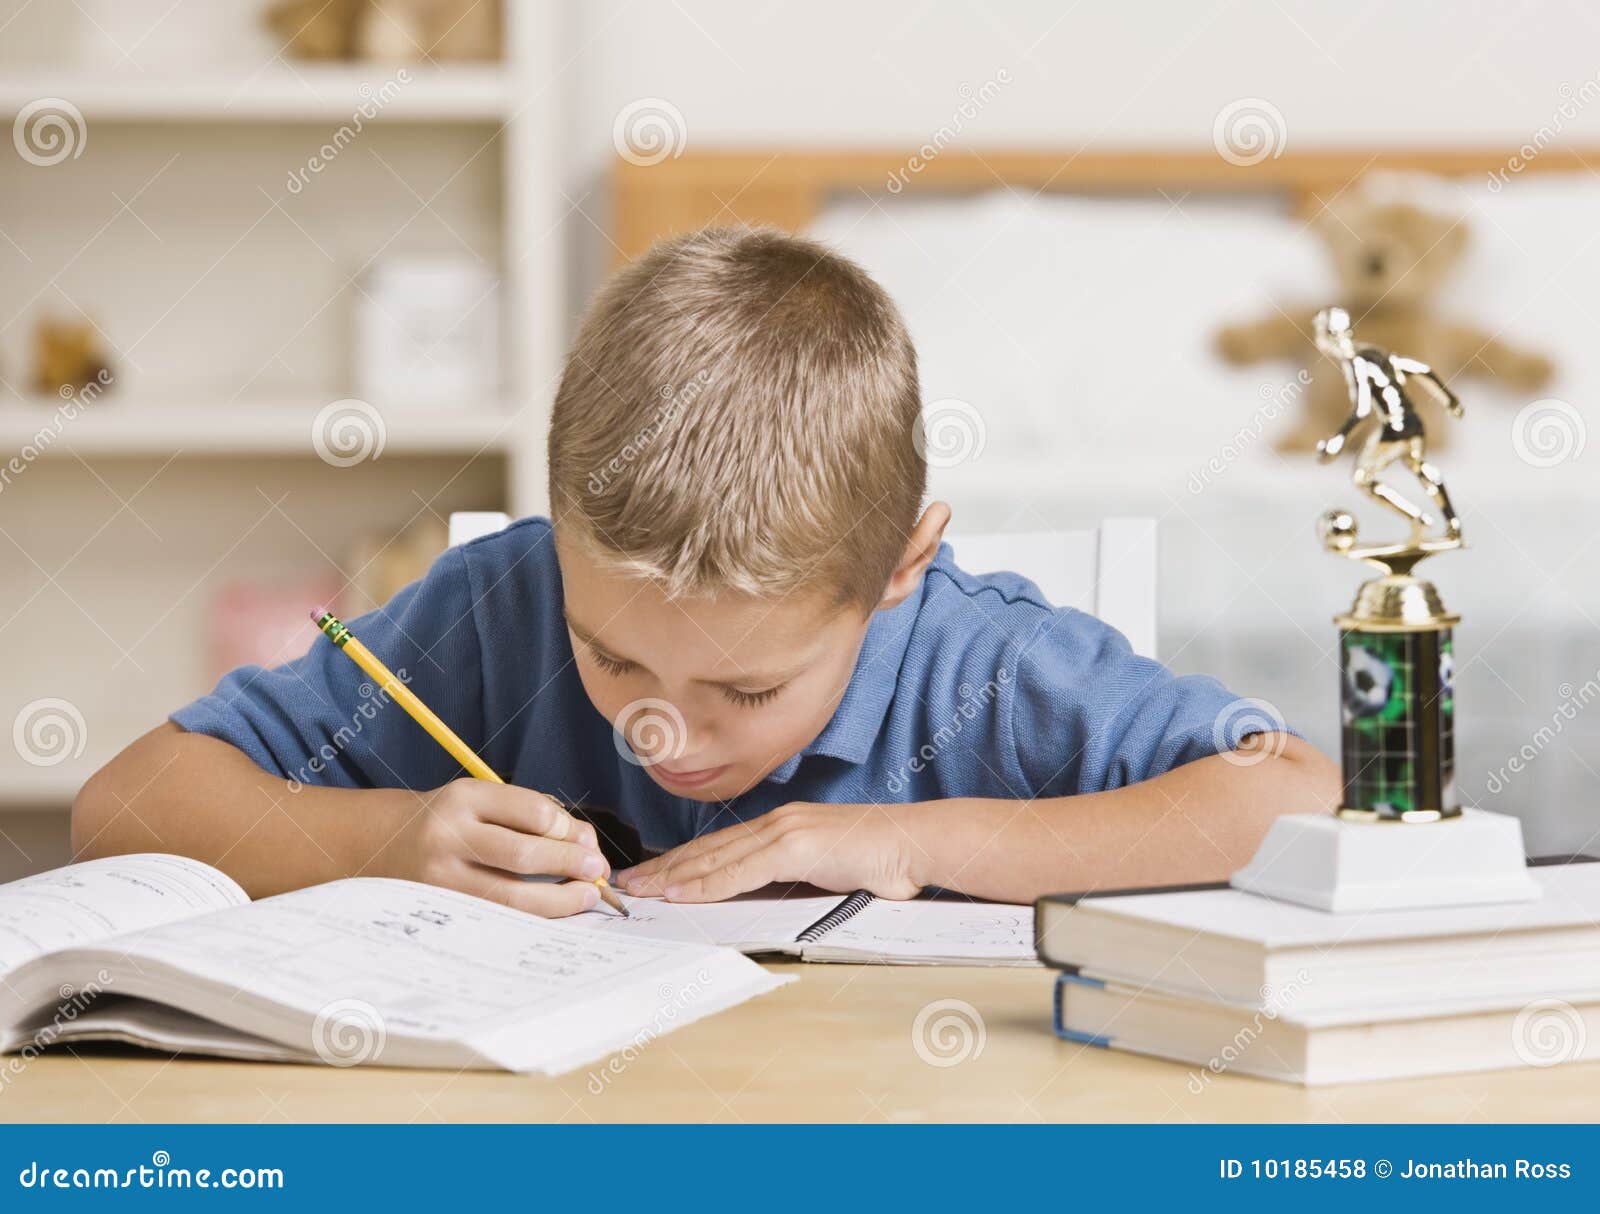 boy doing homework image